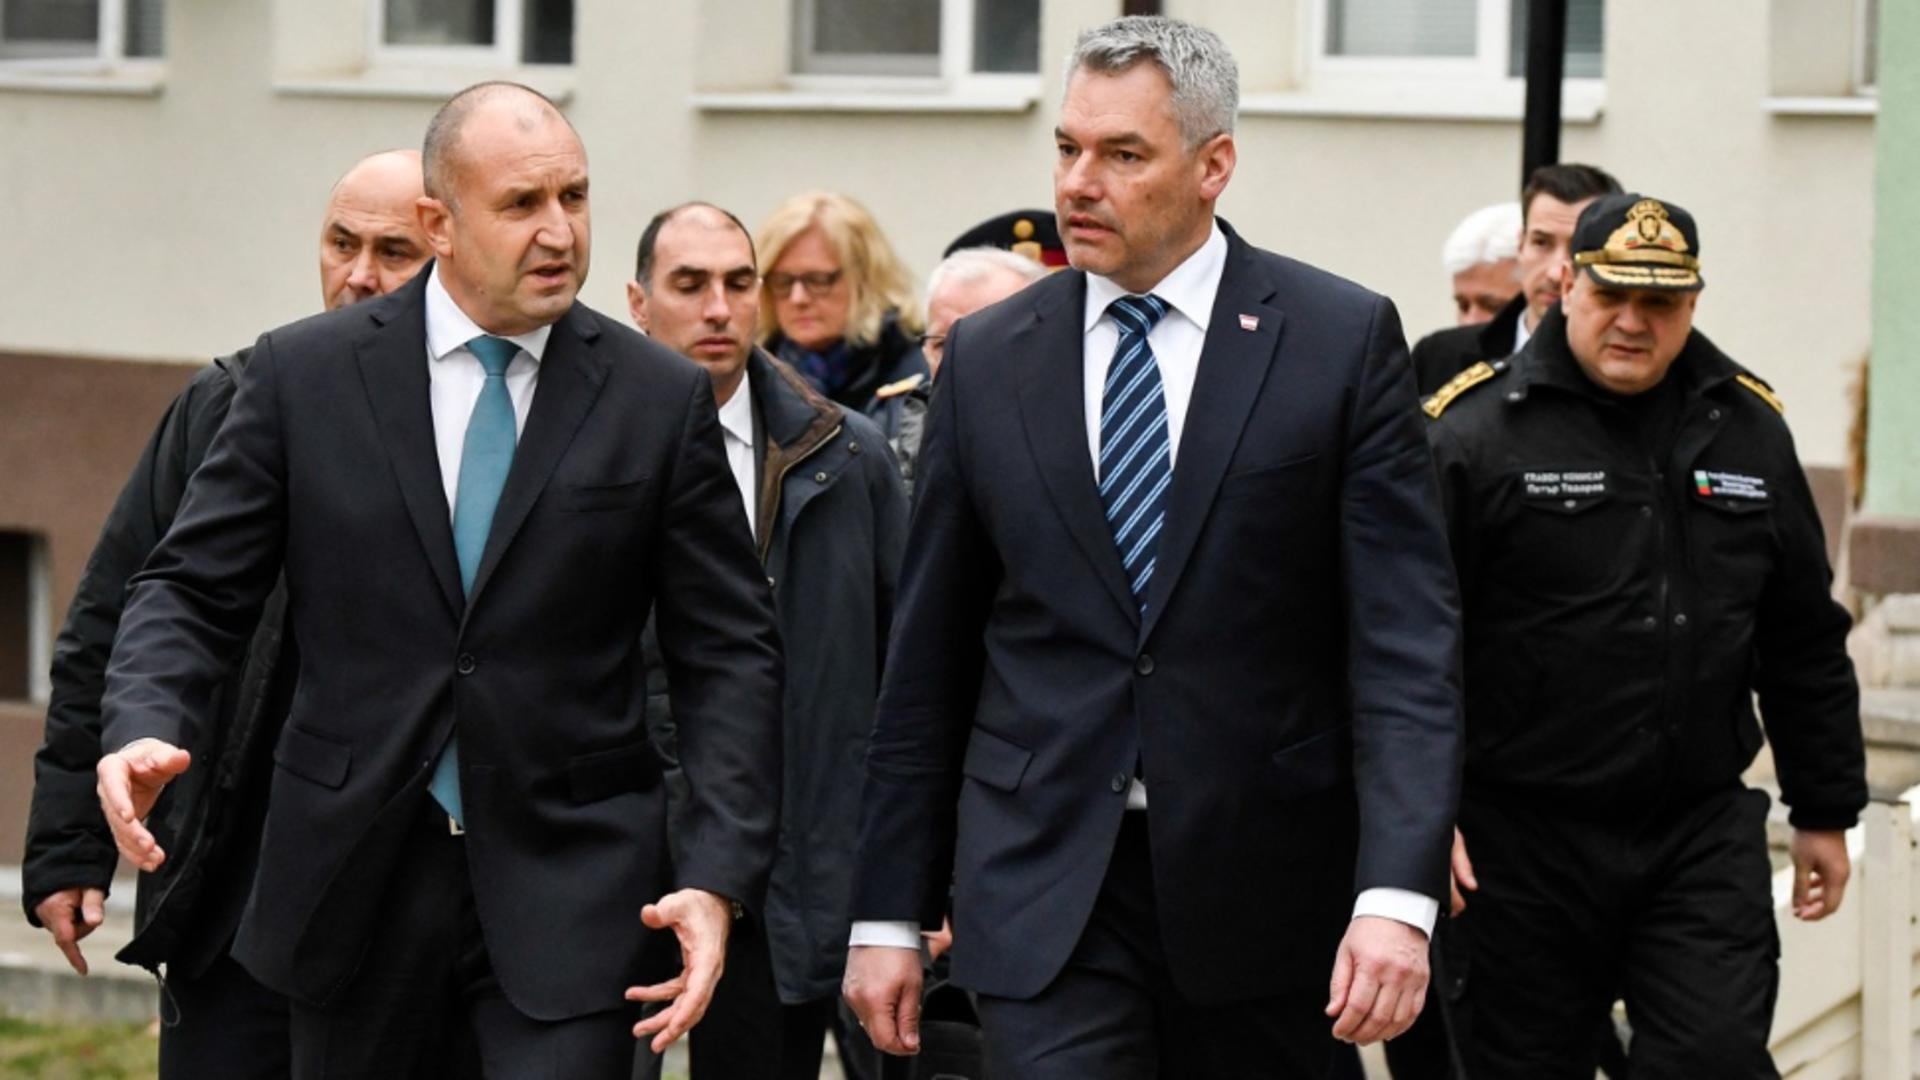 Președintele Bulgariei - Rumen Radev și cancelarul austriac - Karl Nehammer Foto: Profi Media